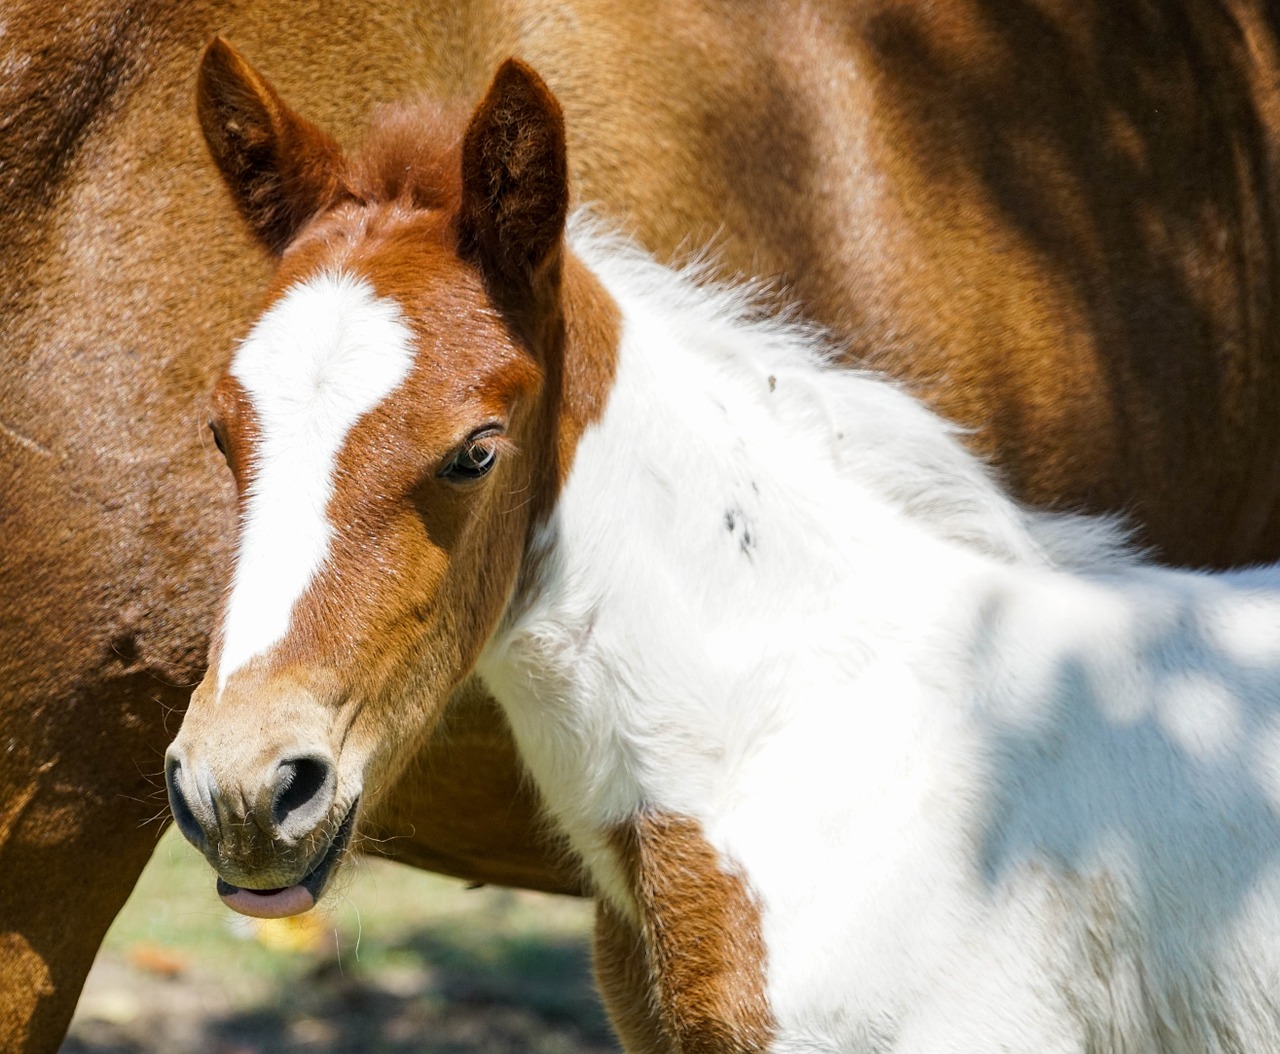 colt horse baby free photo